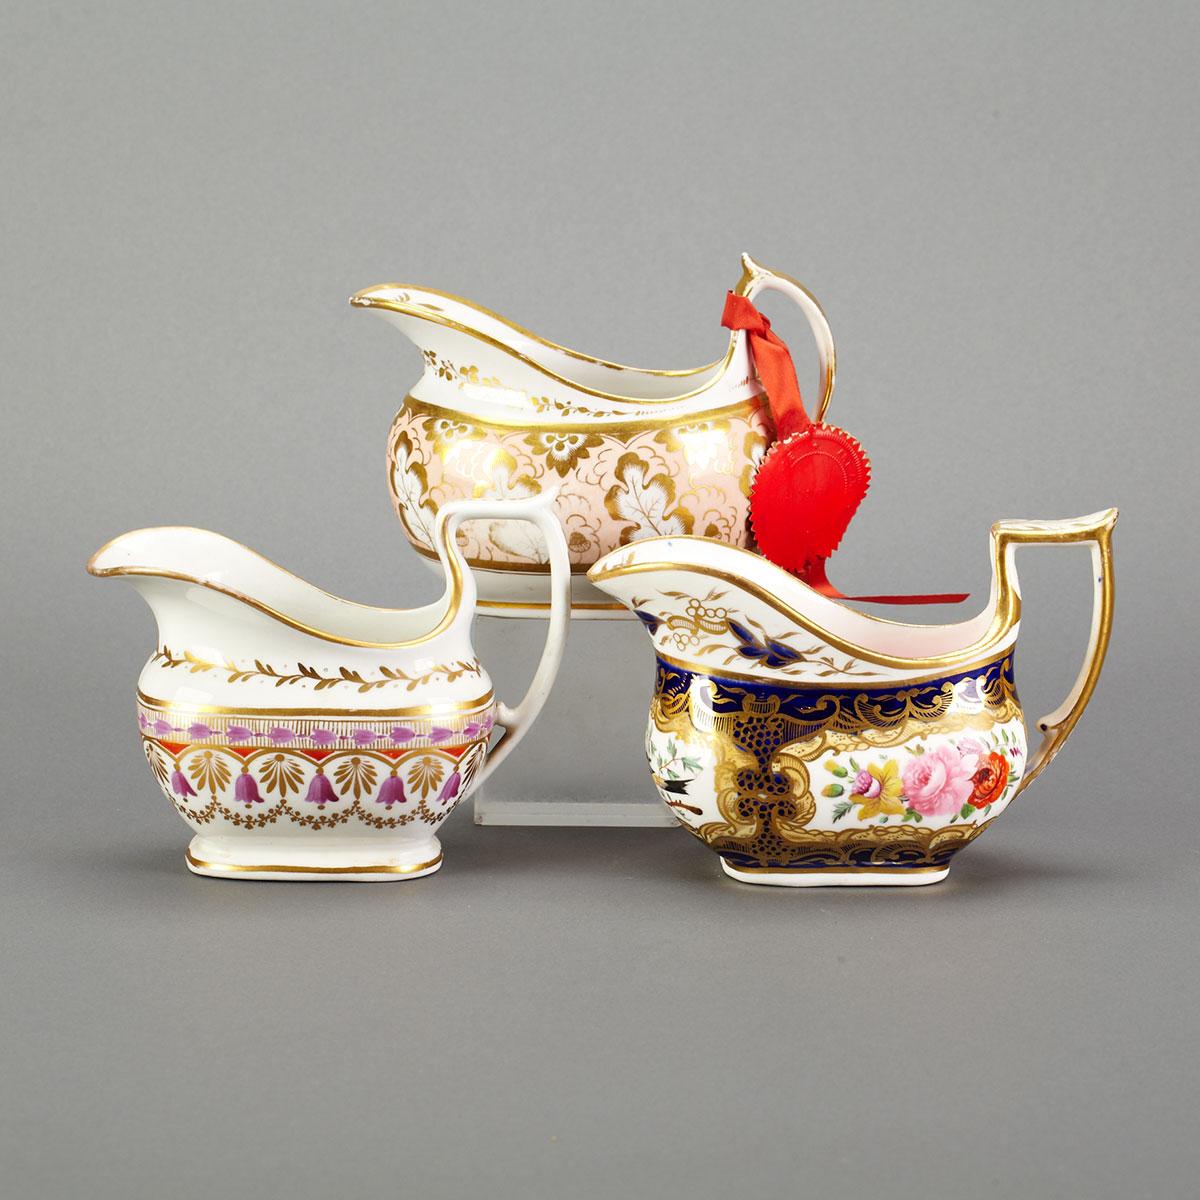 Three English Porcelain Cream Jugs, early 19th century